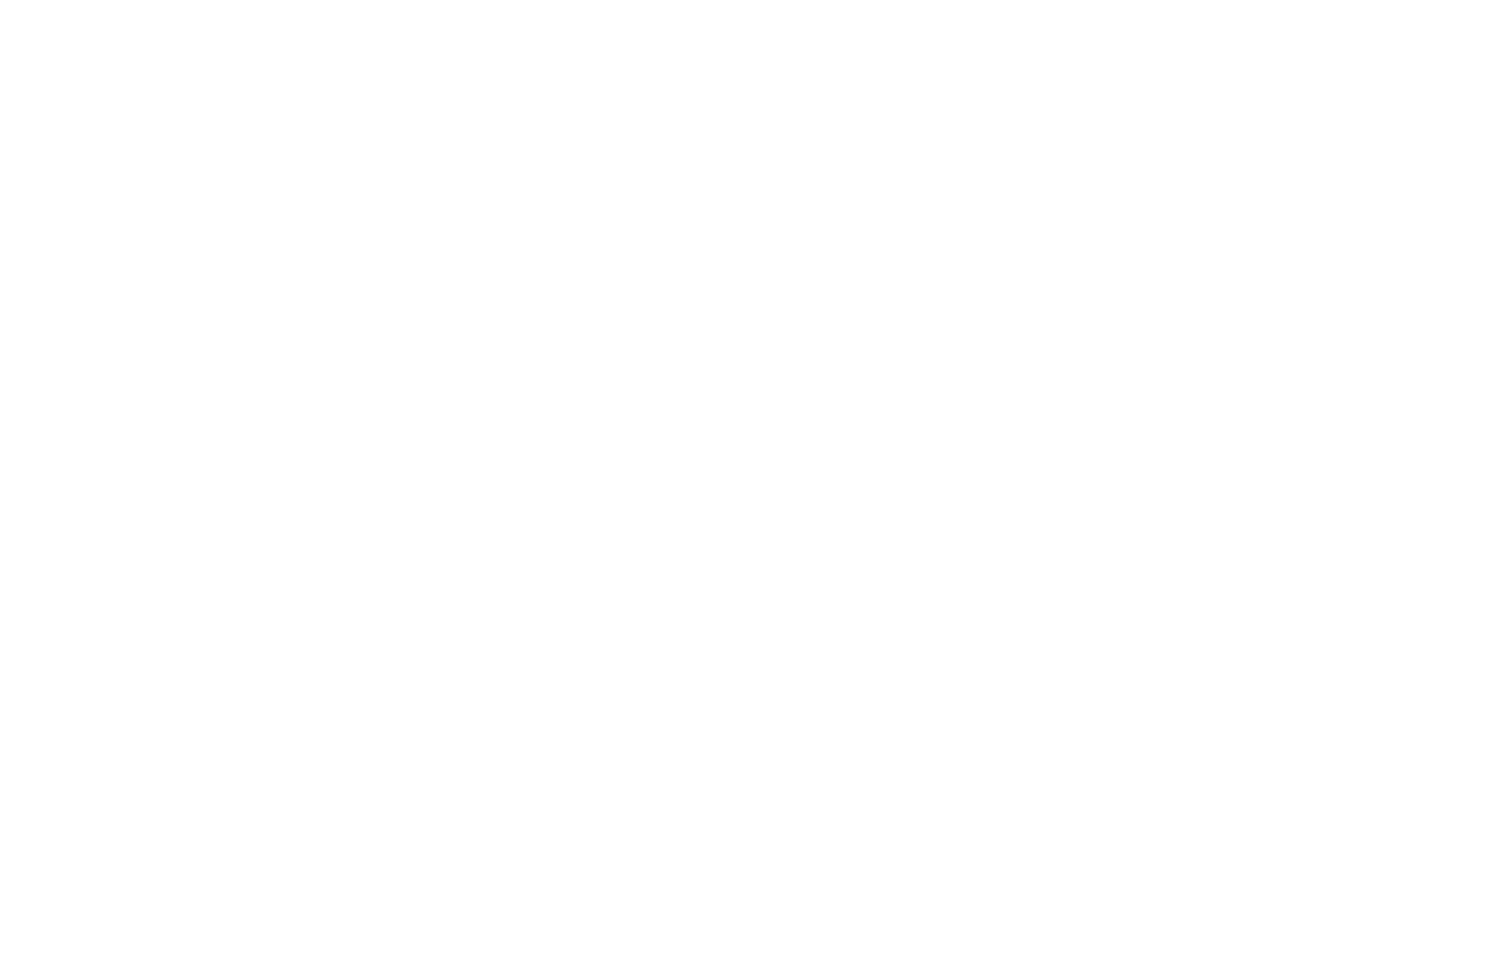 Rivals of Poker